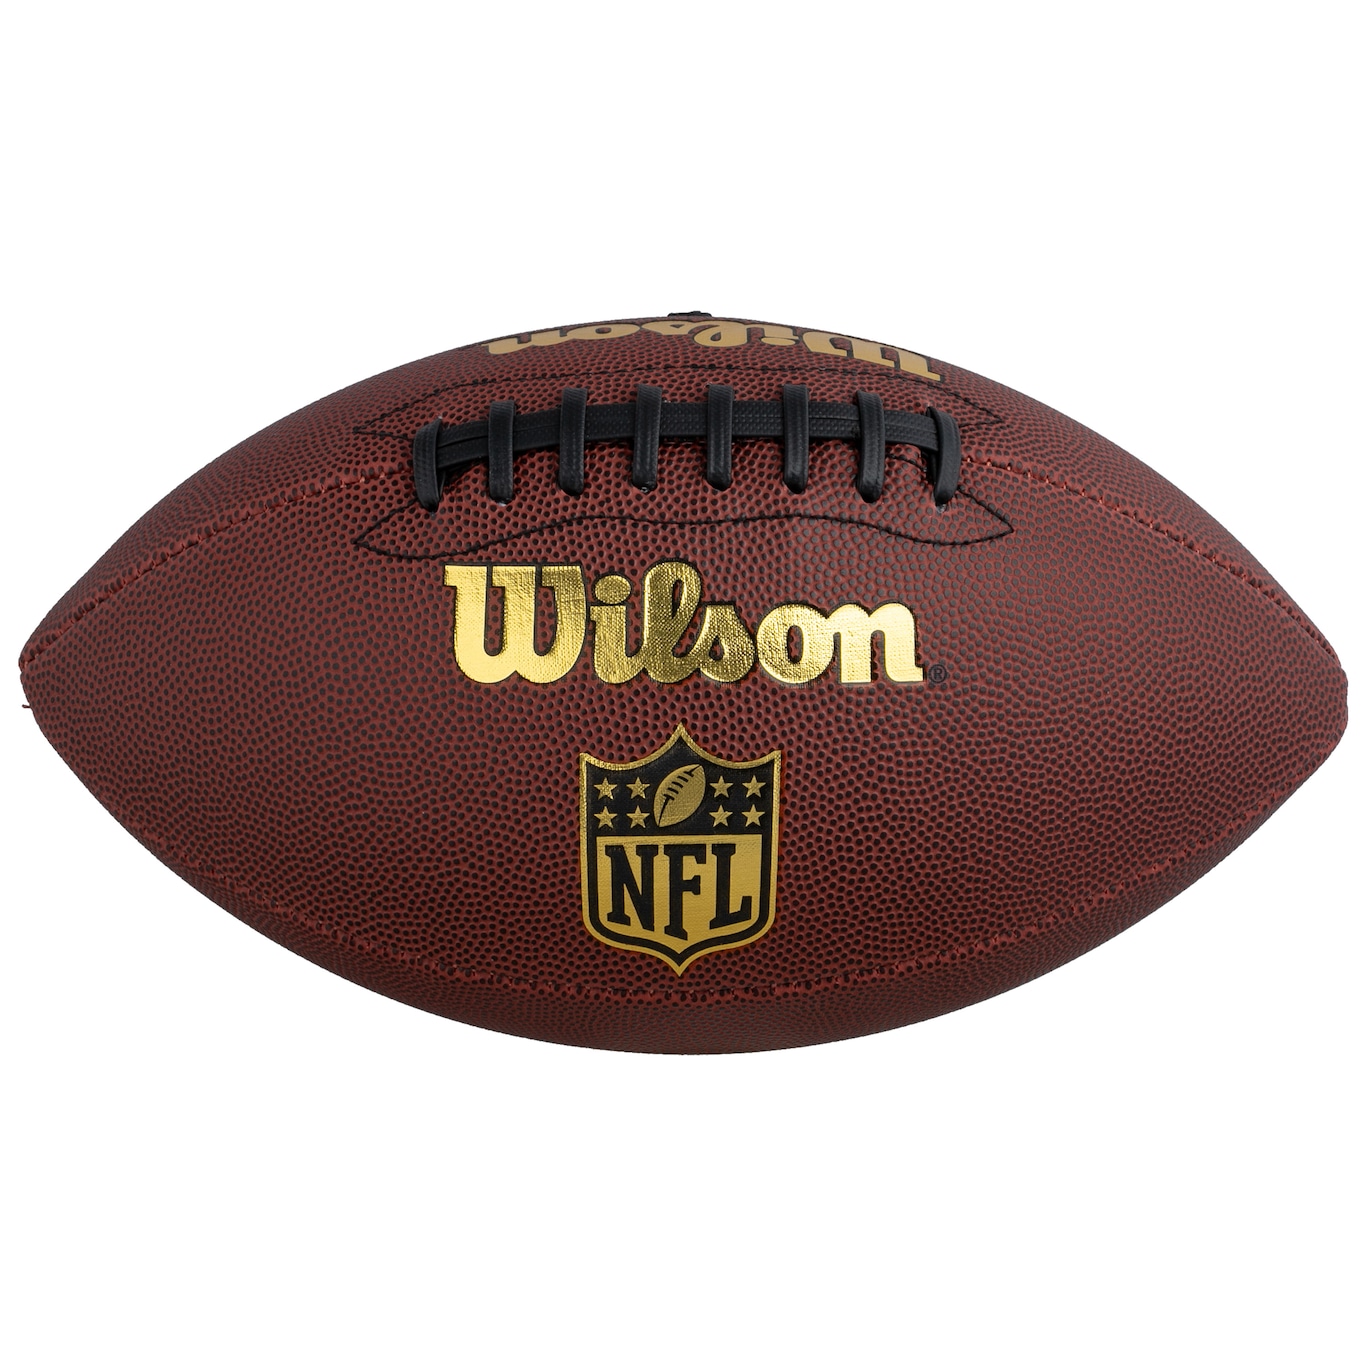 Body New York Giants NFL Futebol Americano Personalizado